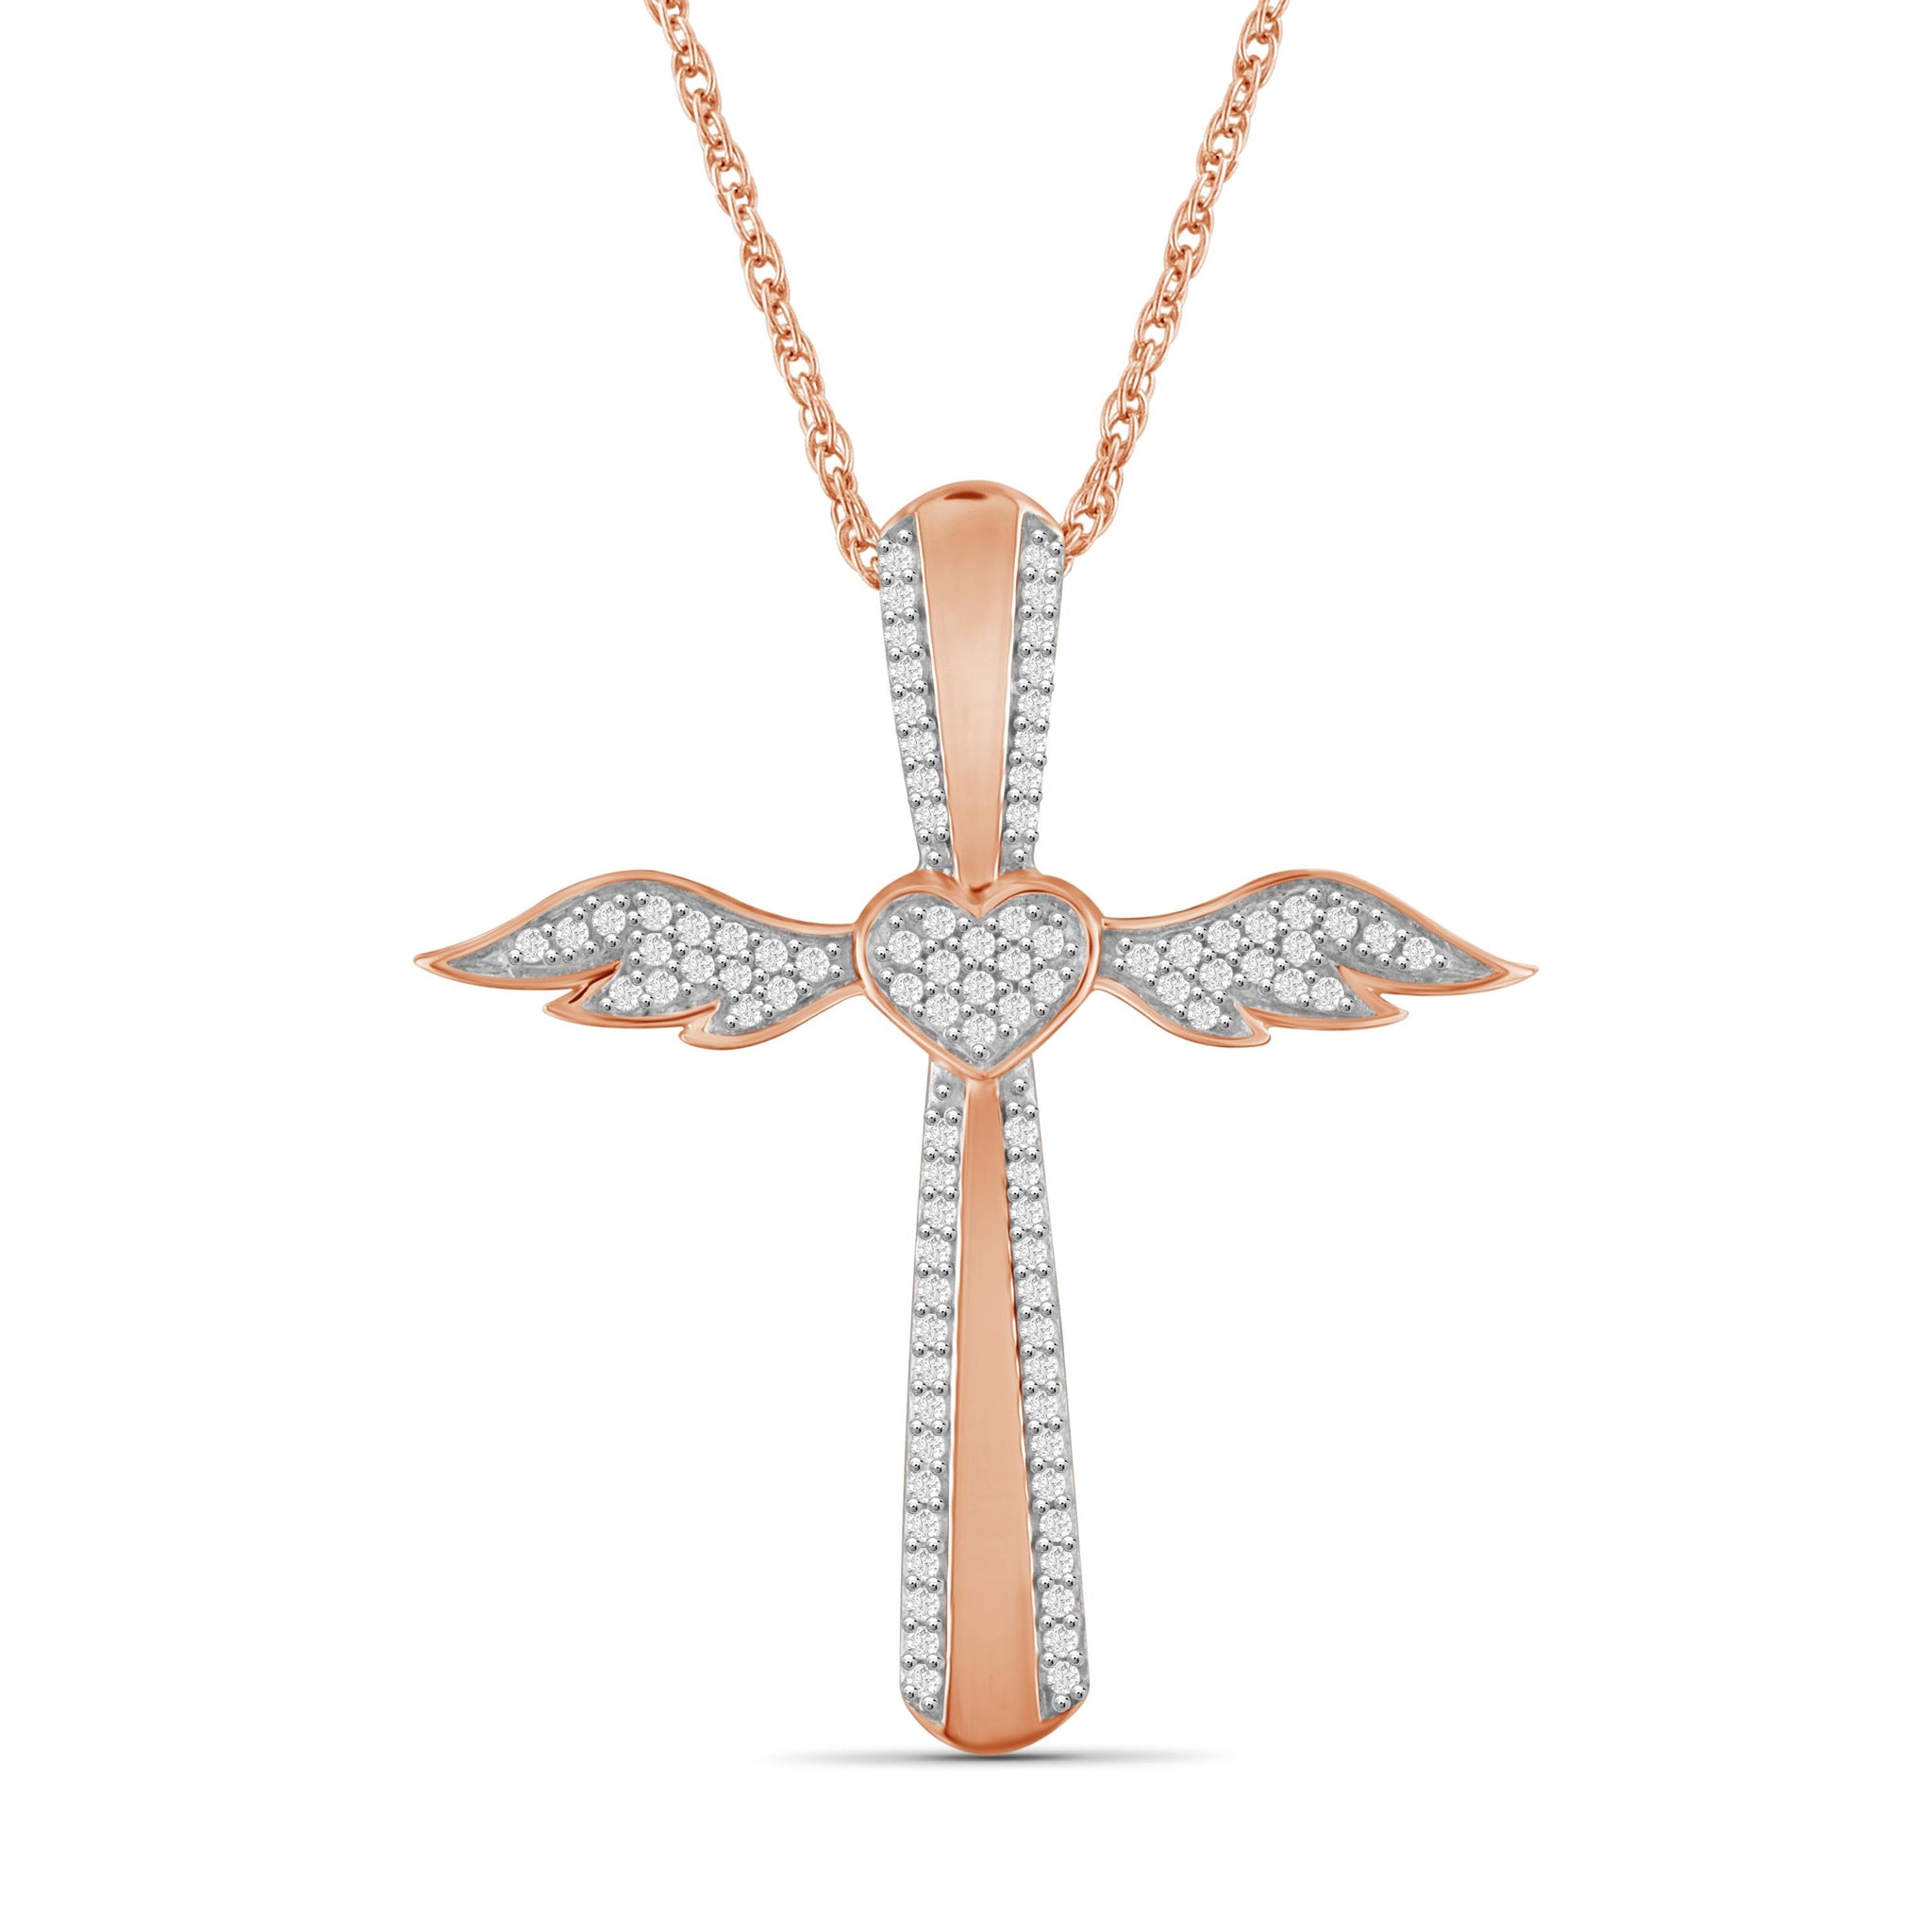 JewelonFire 1/4 Ctw White Diamond Angel Cross Pendant in Rose Gold over Silver